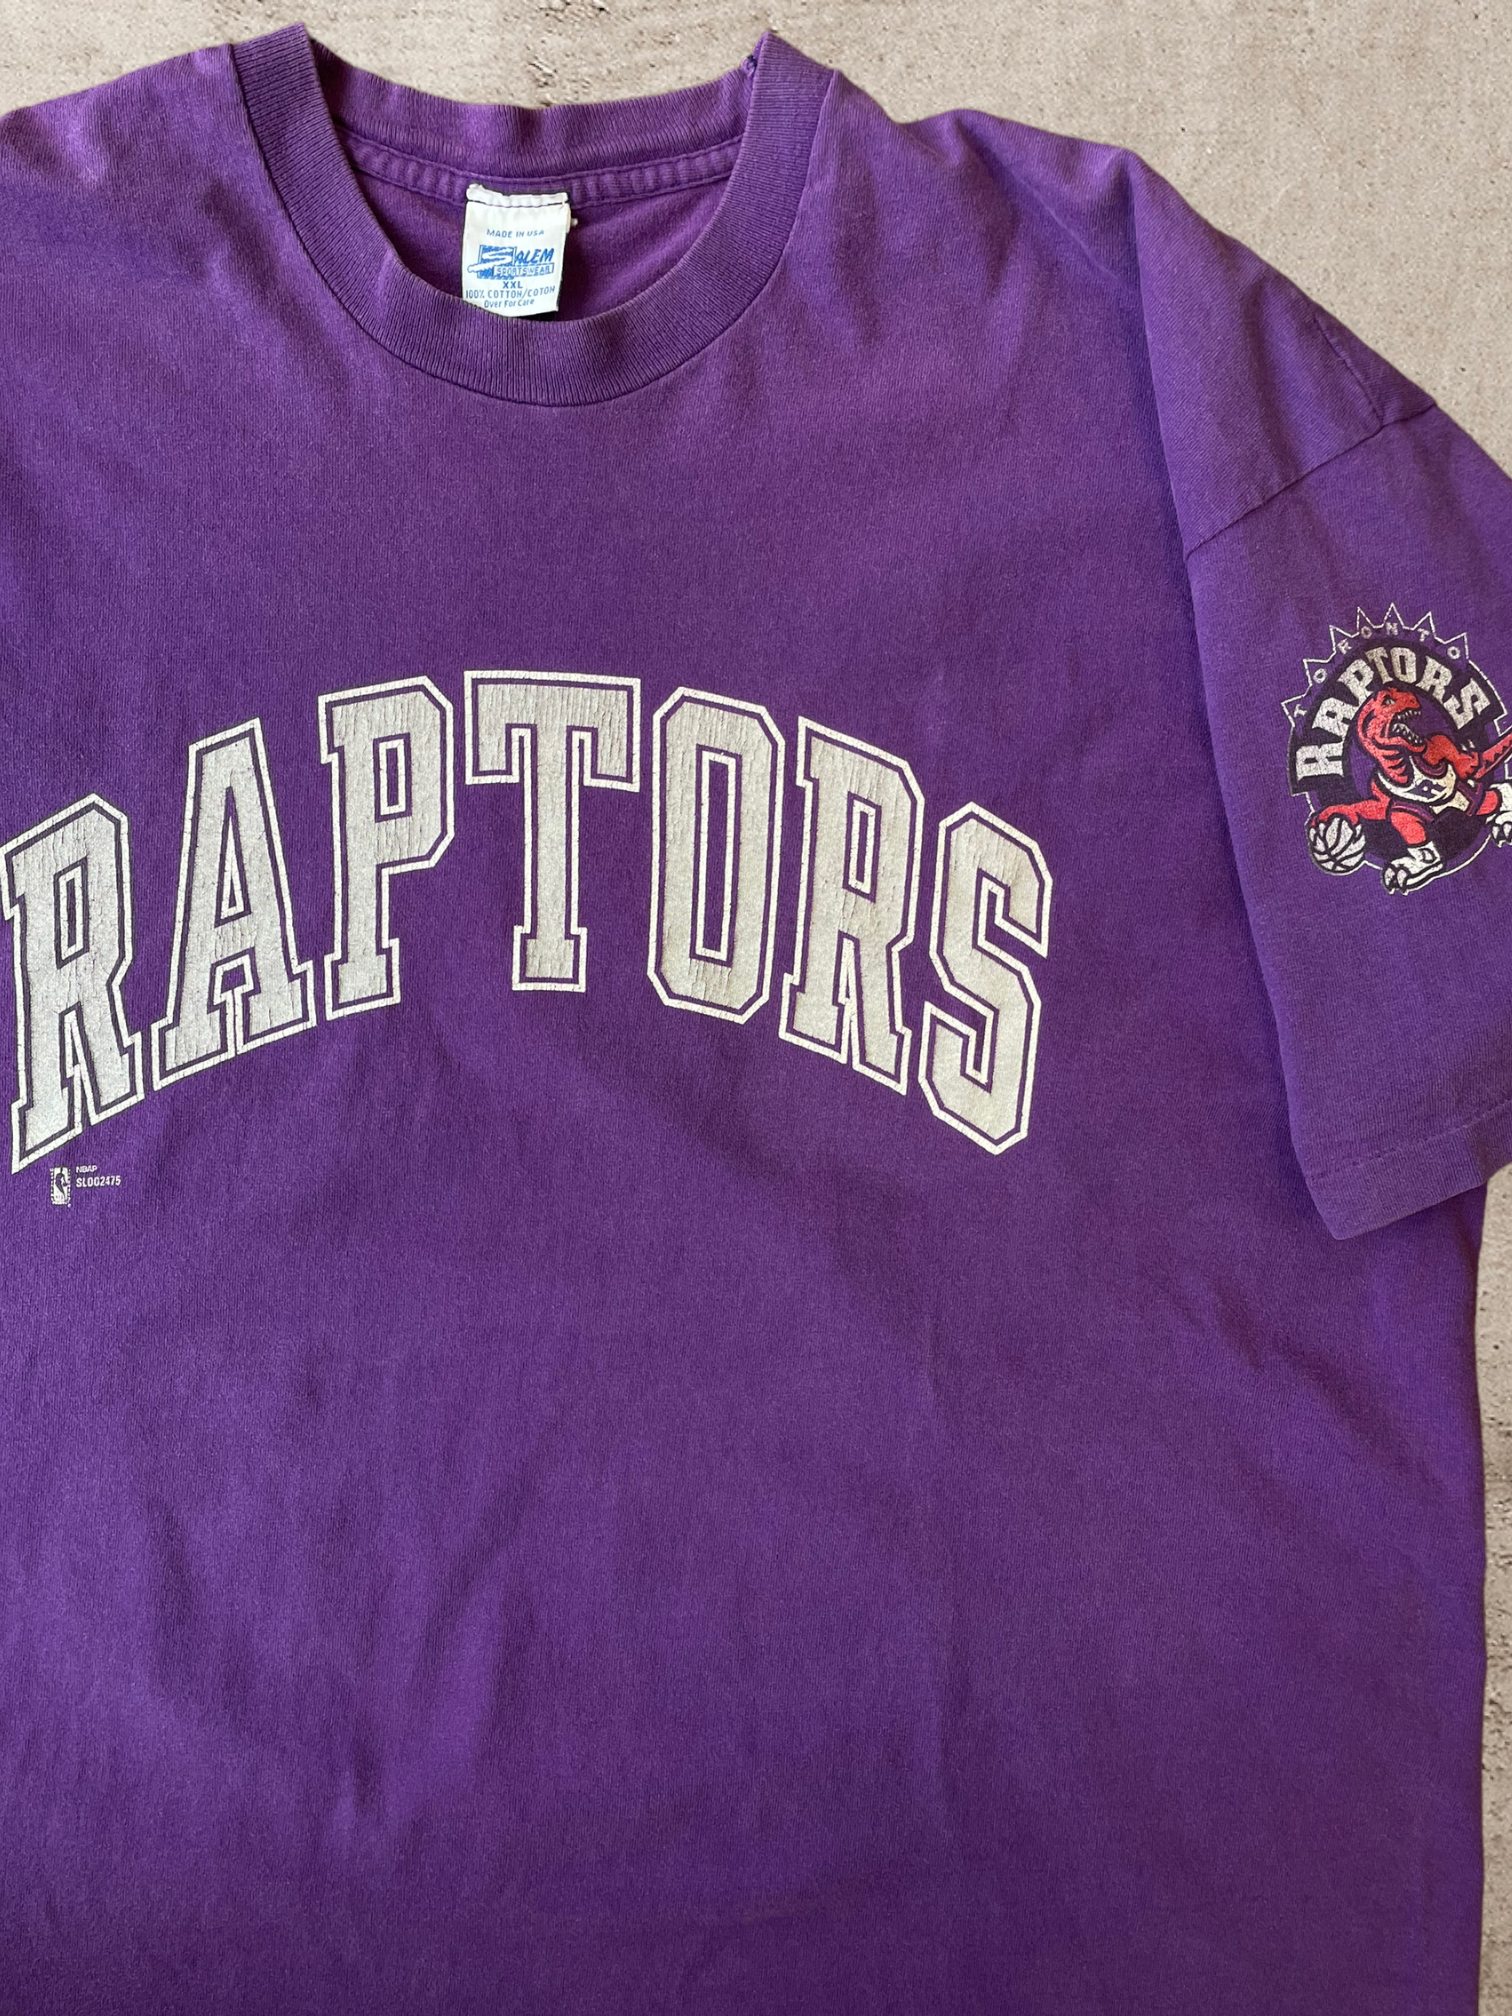 90s Toronto Raptors T-Shirt - XX-Large